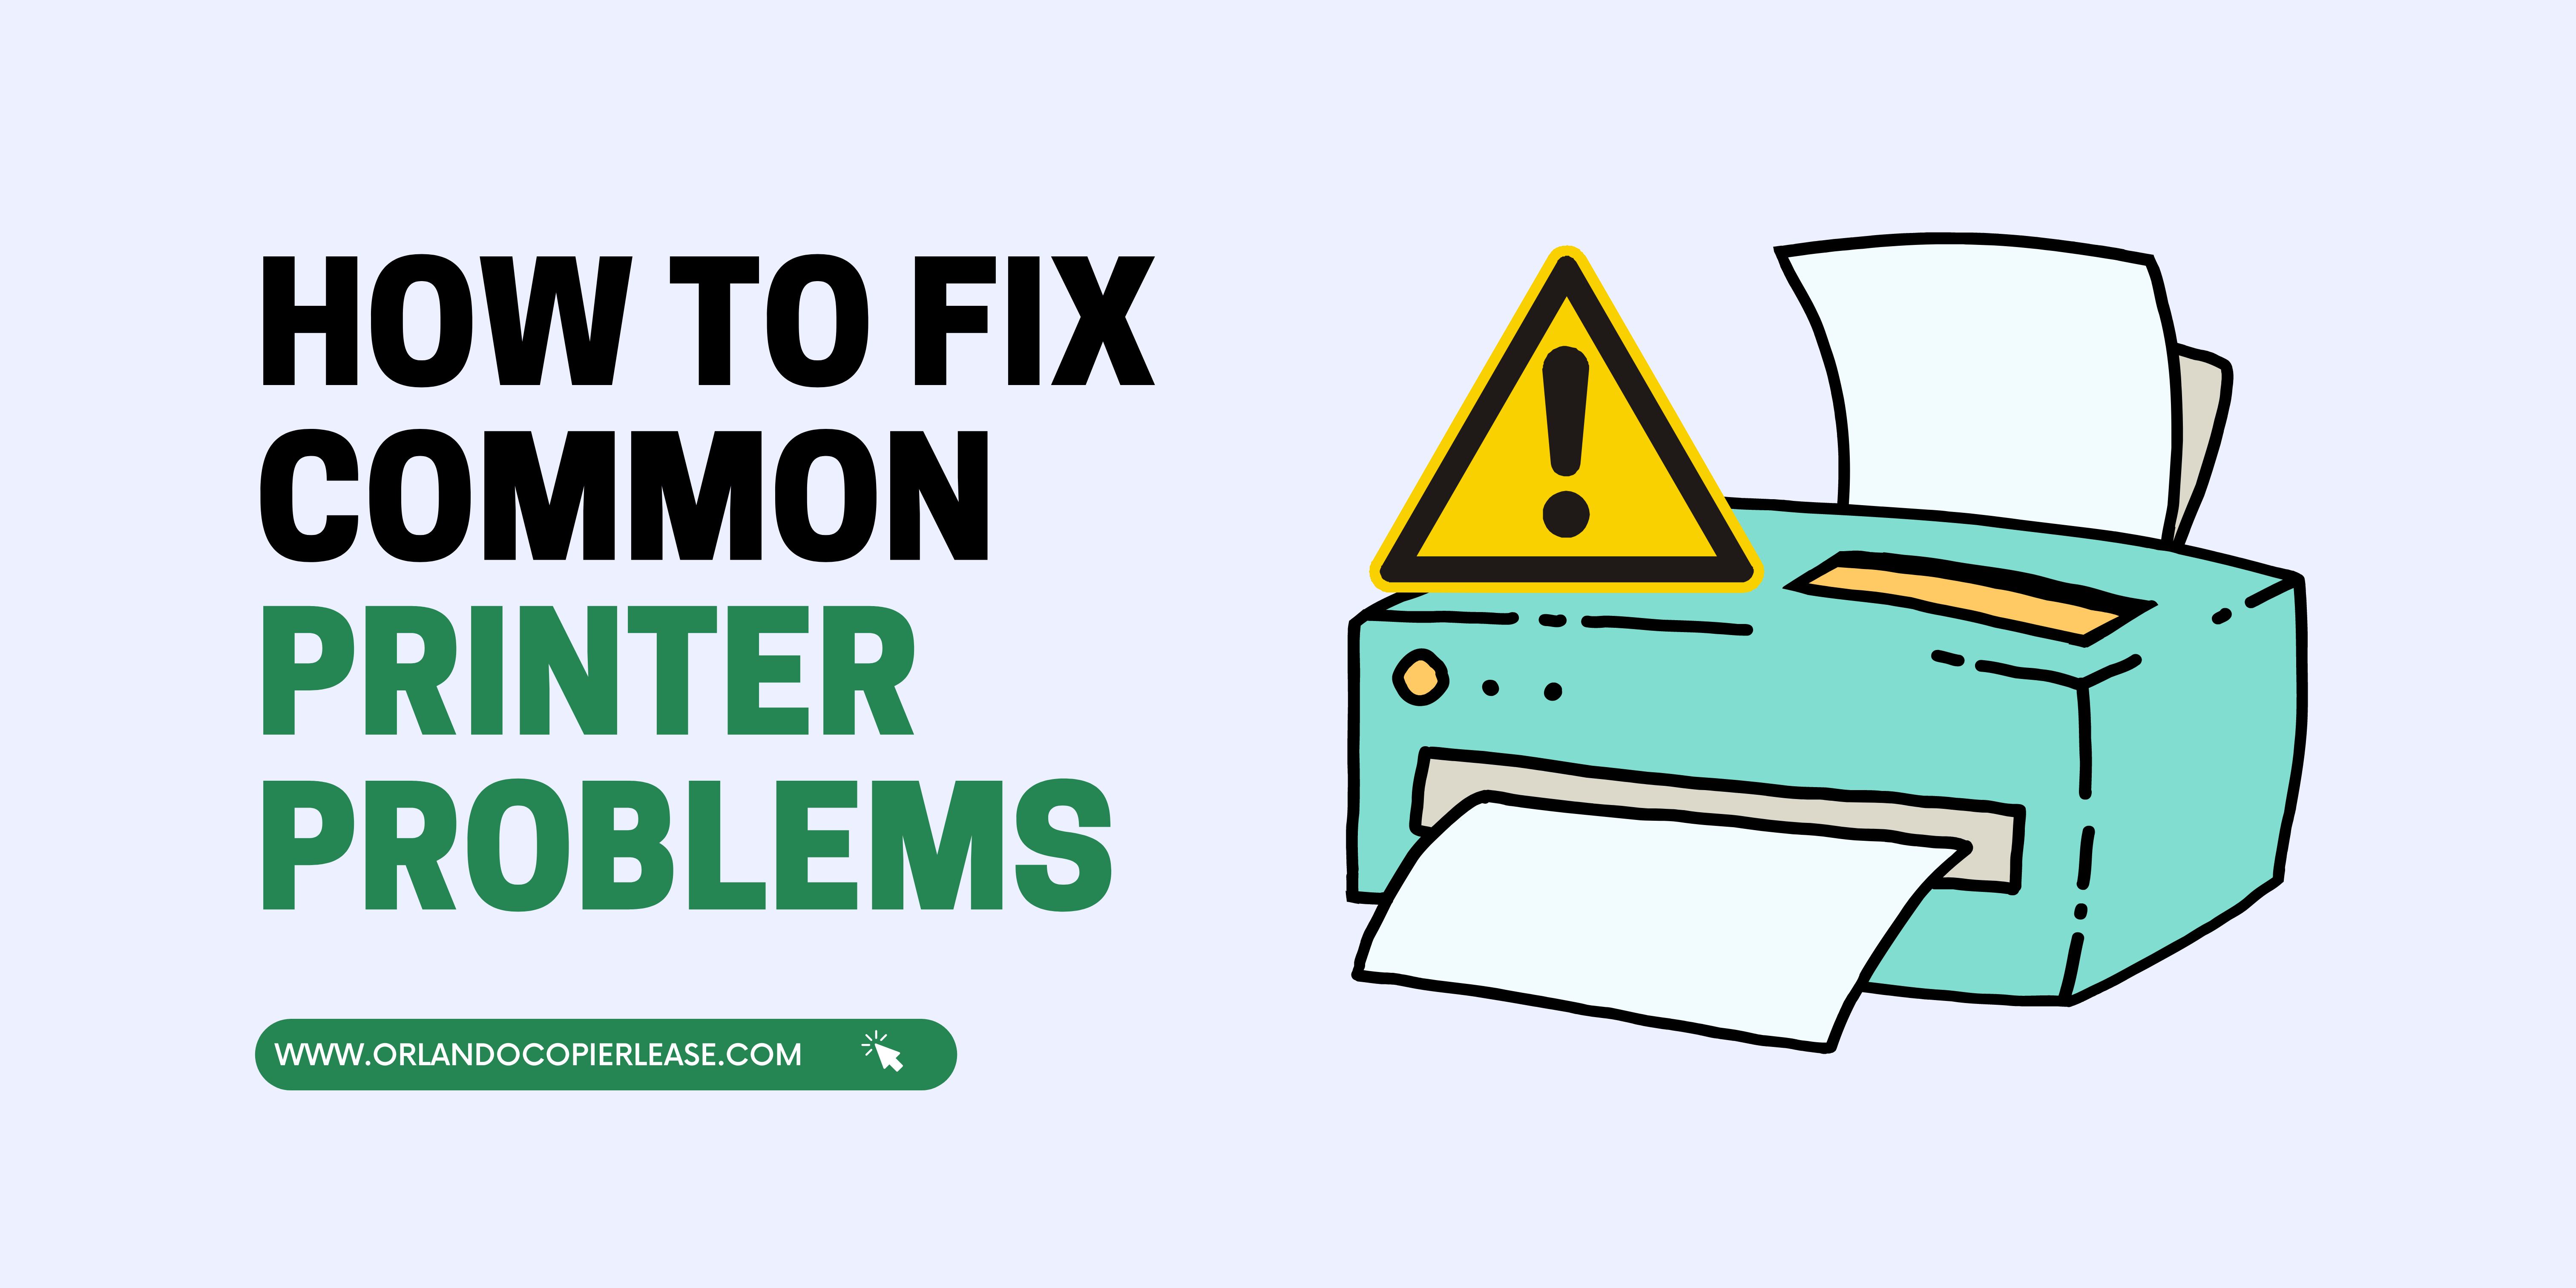 How to Fix Common Printer Problems